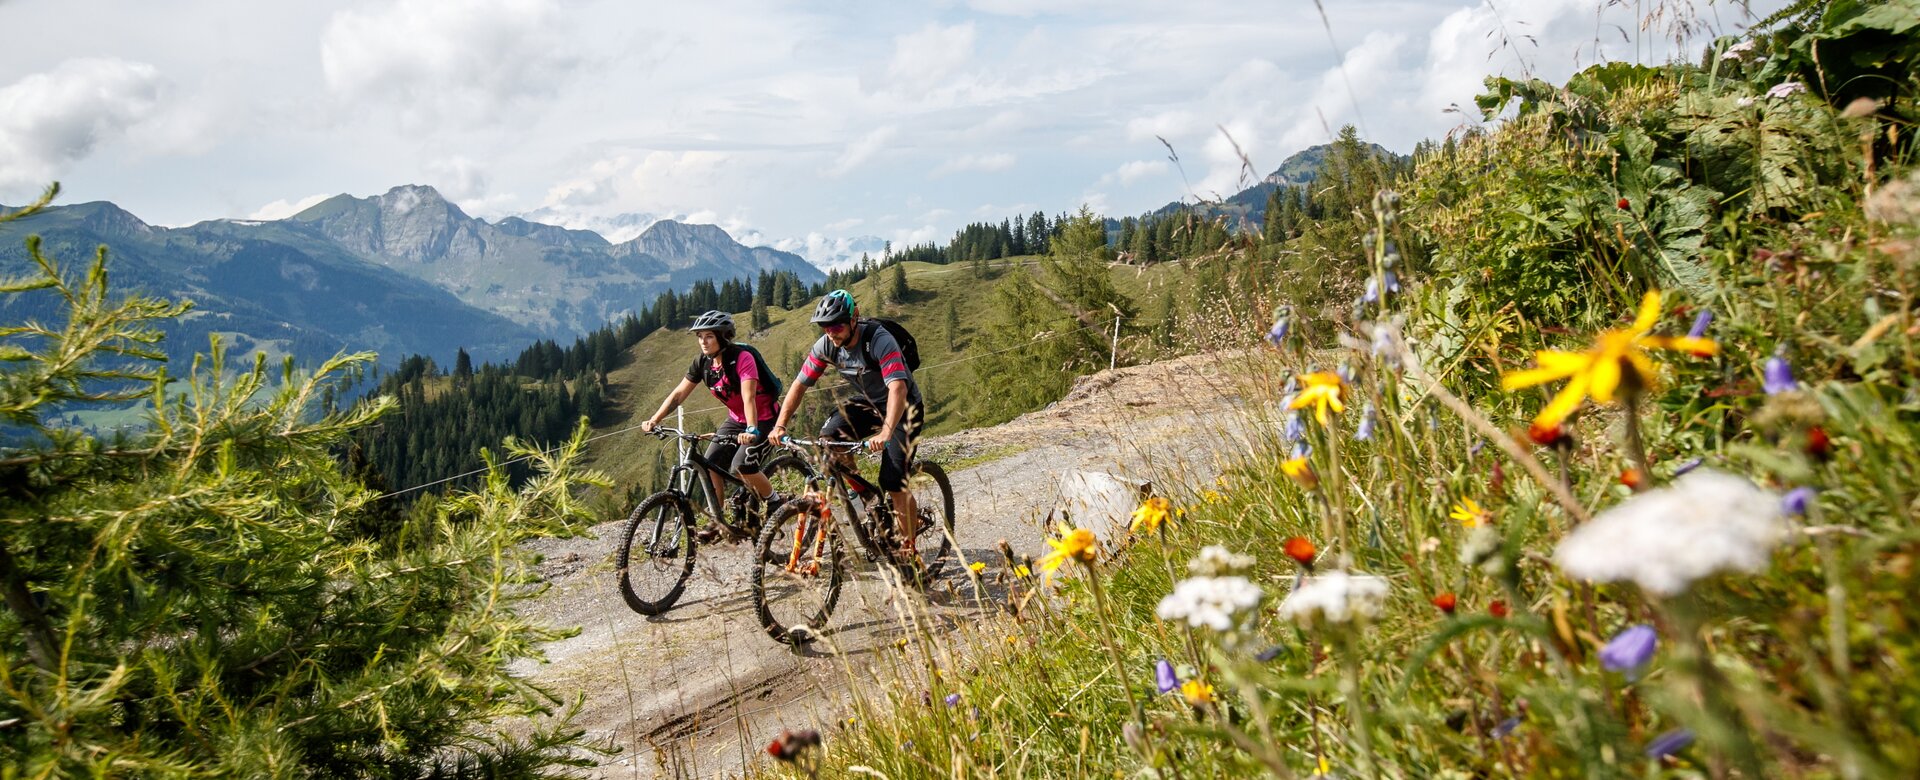 Biking on the scenic mountainbike trails in Grossarl valley - summer in Ski amadé | © Erwin Haiden